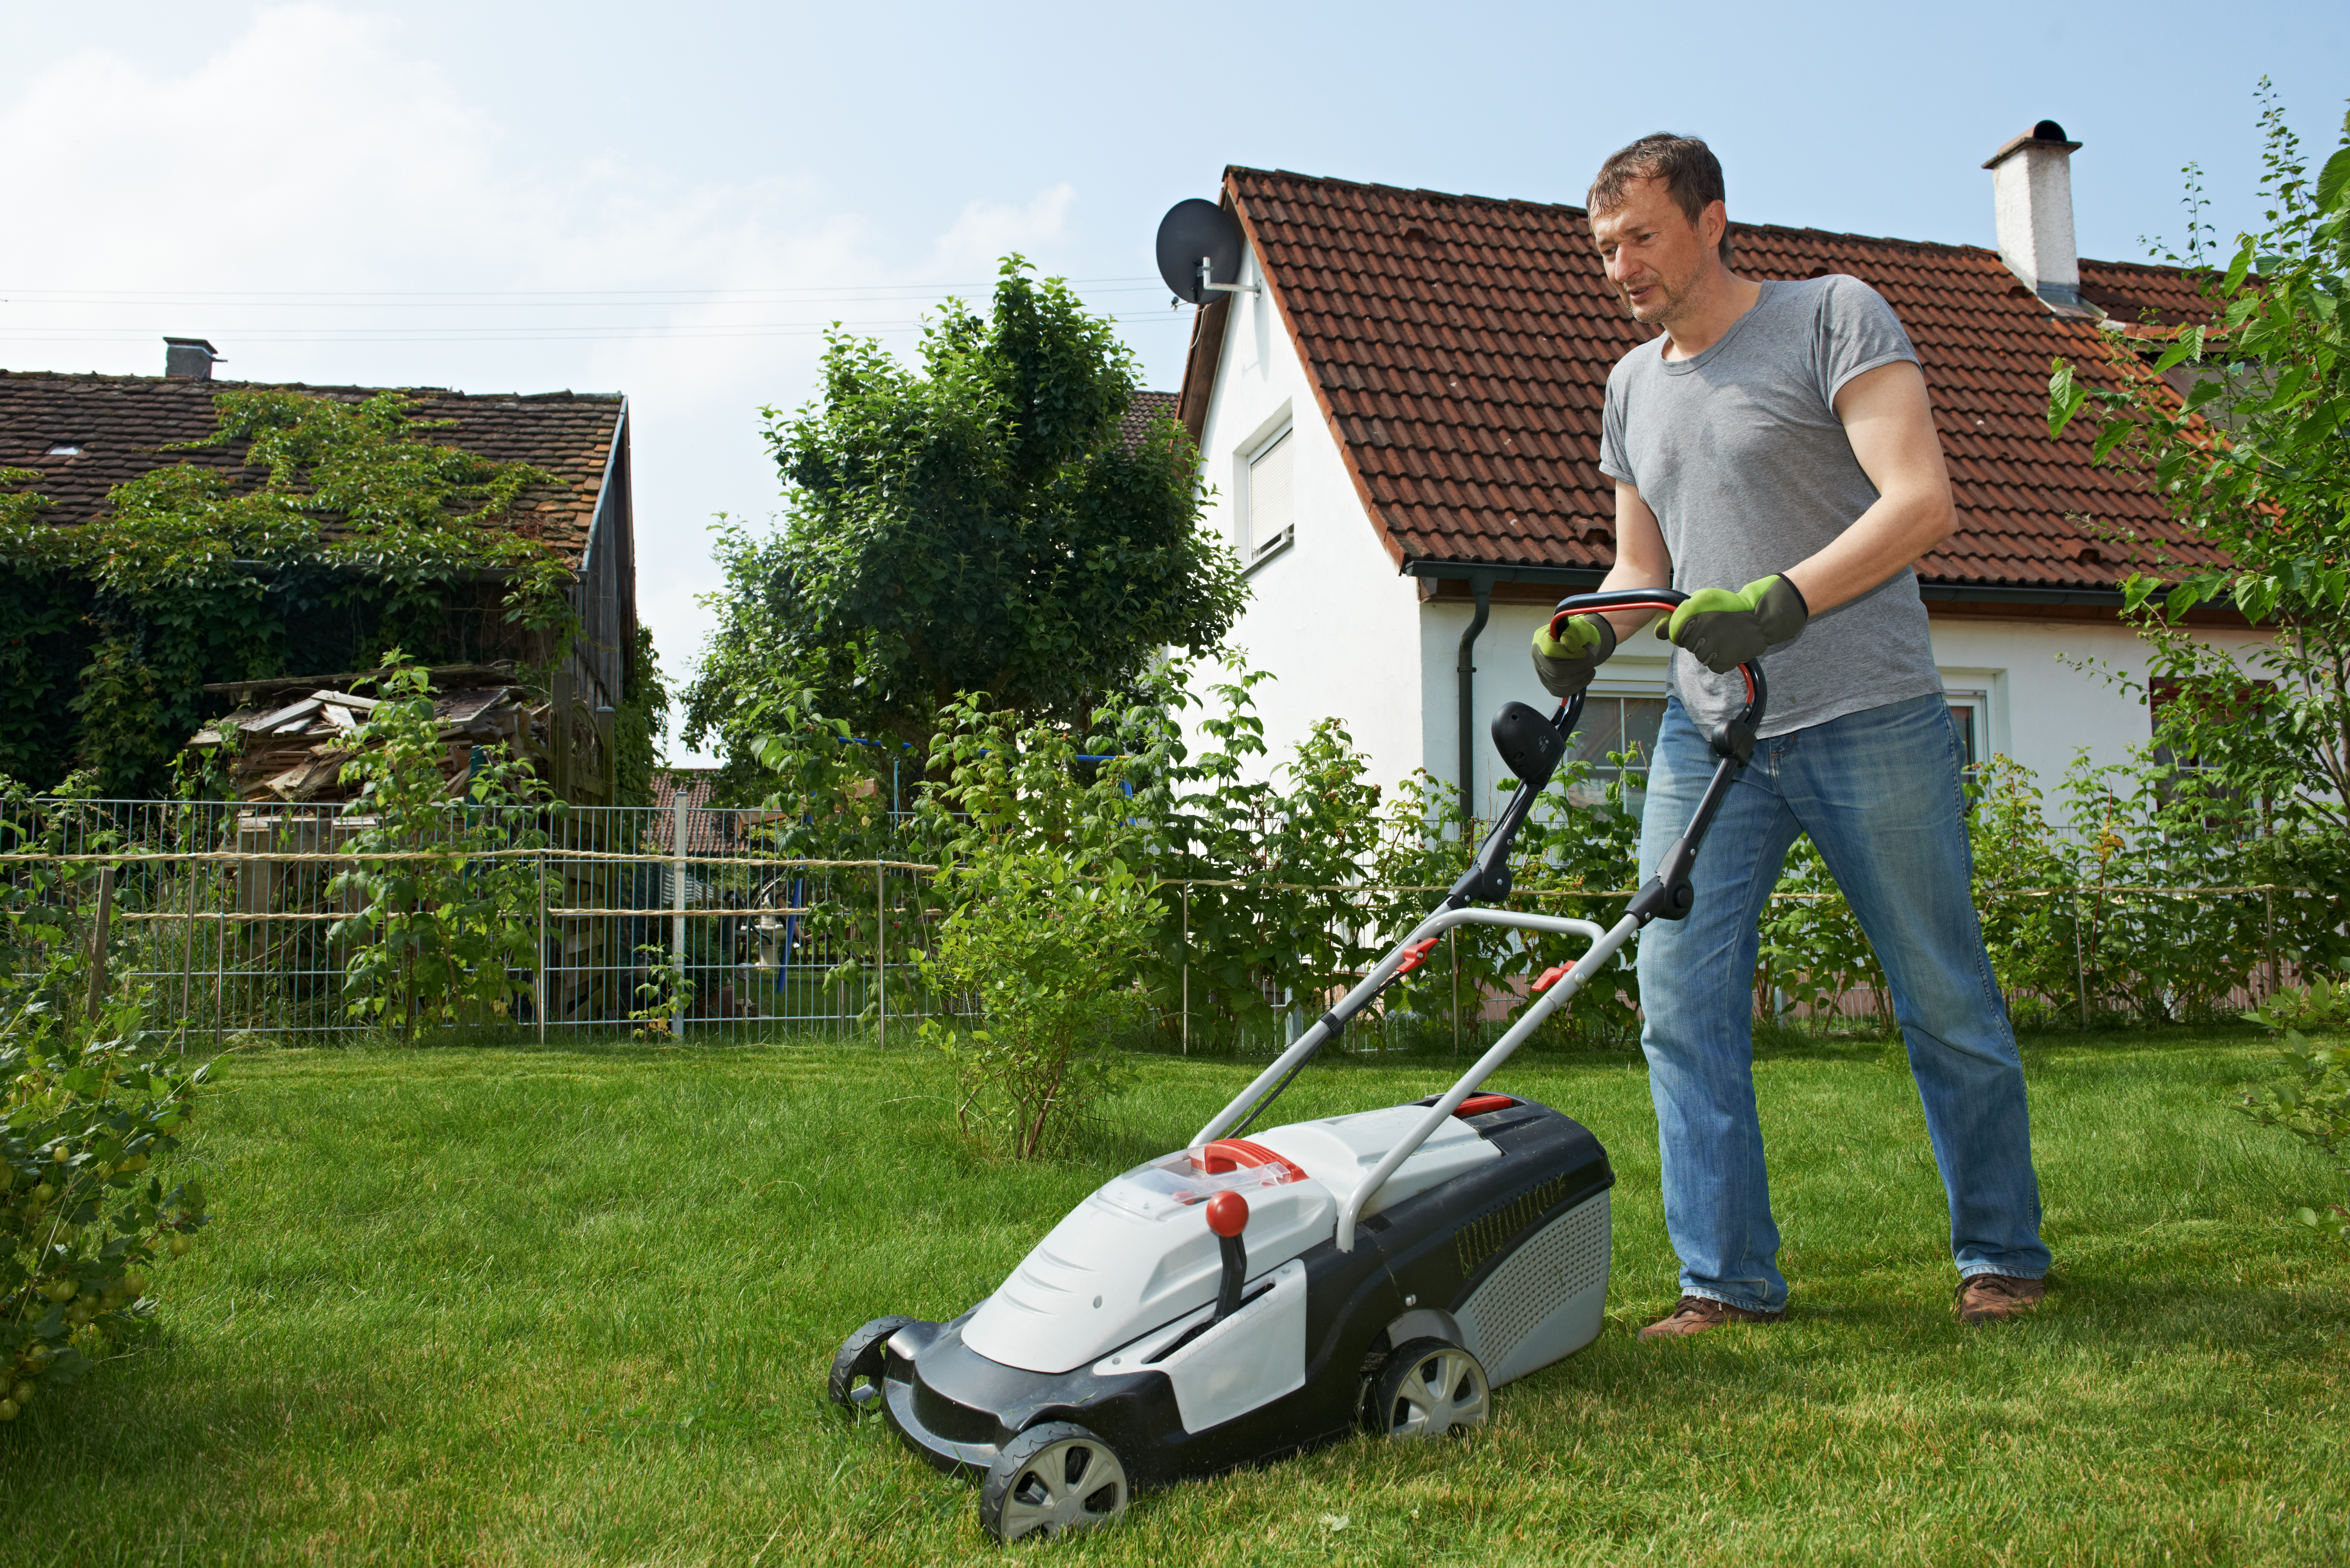 Man cutting grass in his garden yard with lawn mower. | Source: Shutterstock